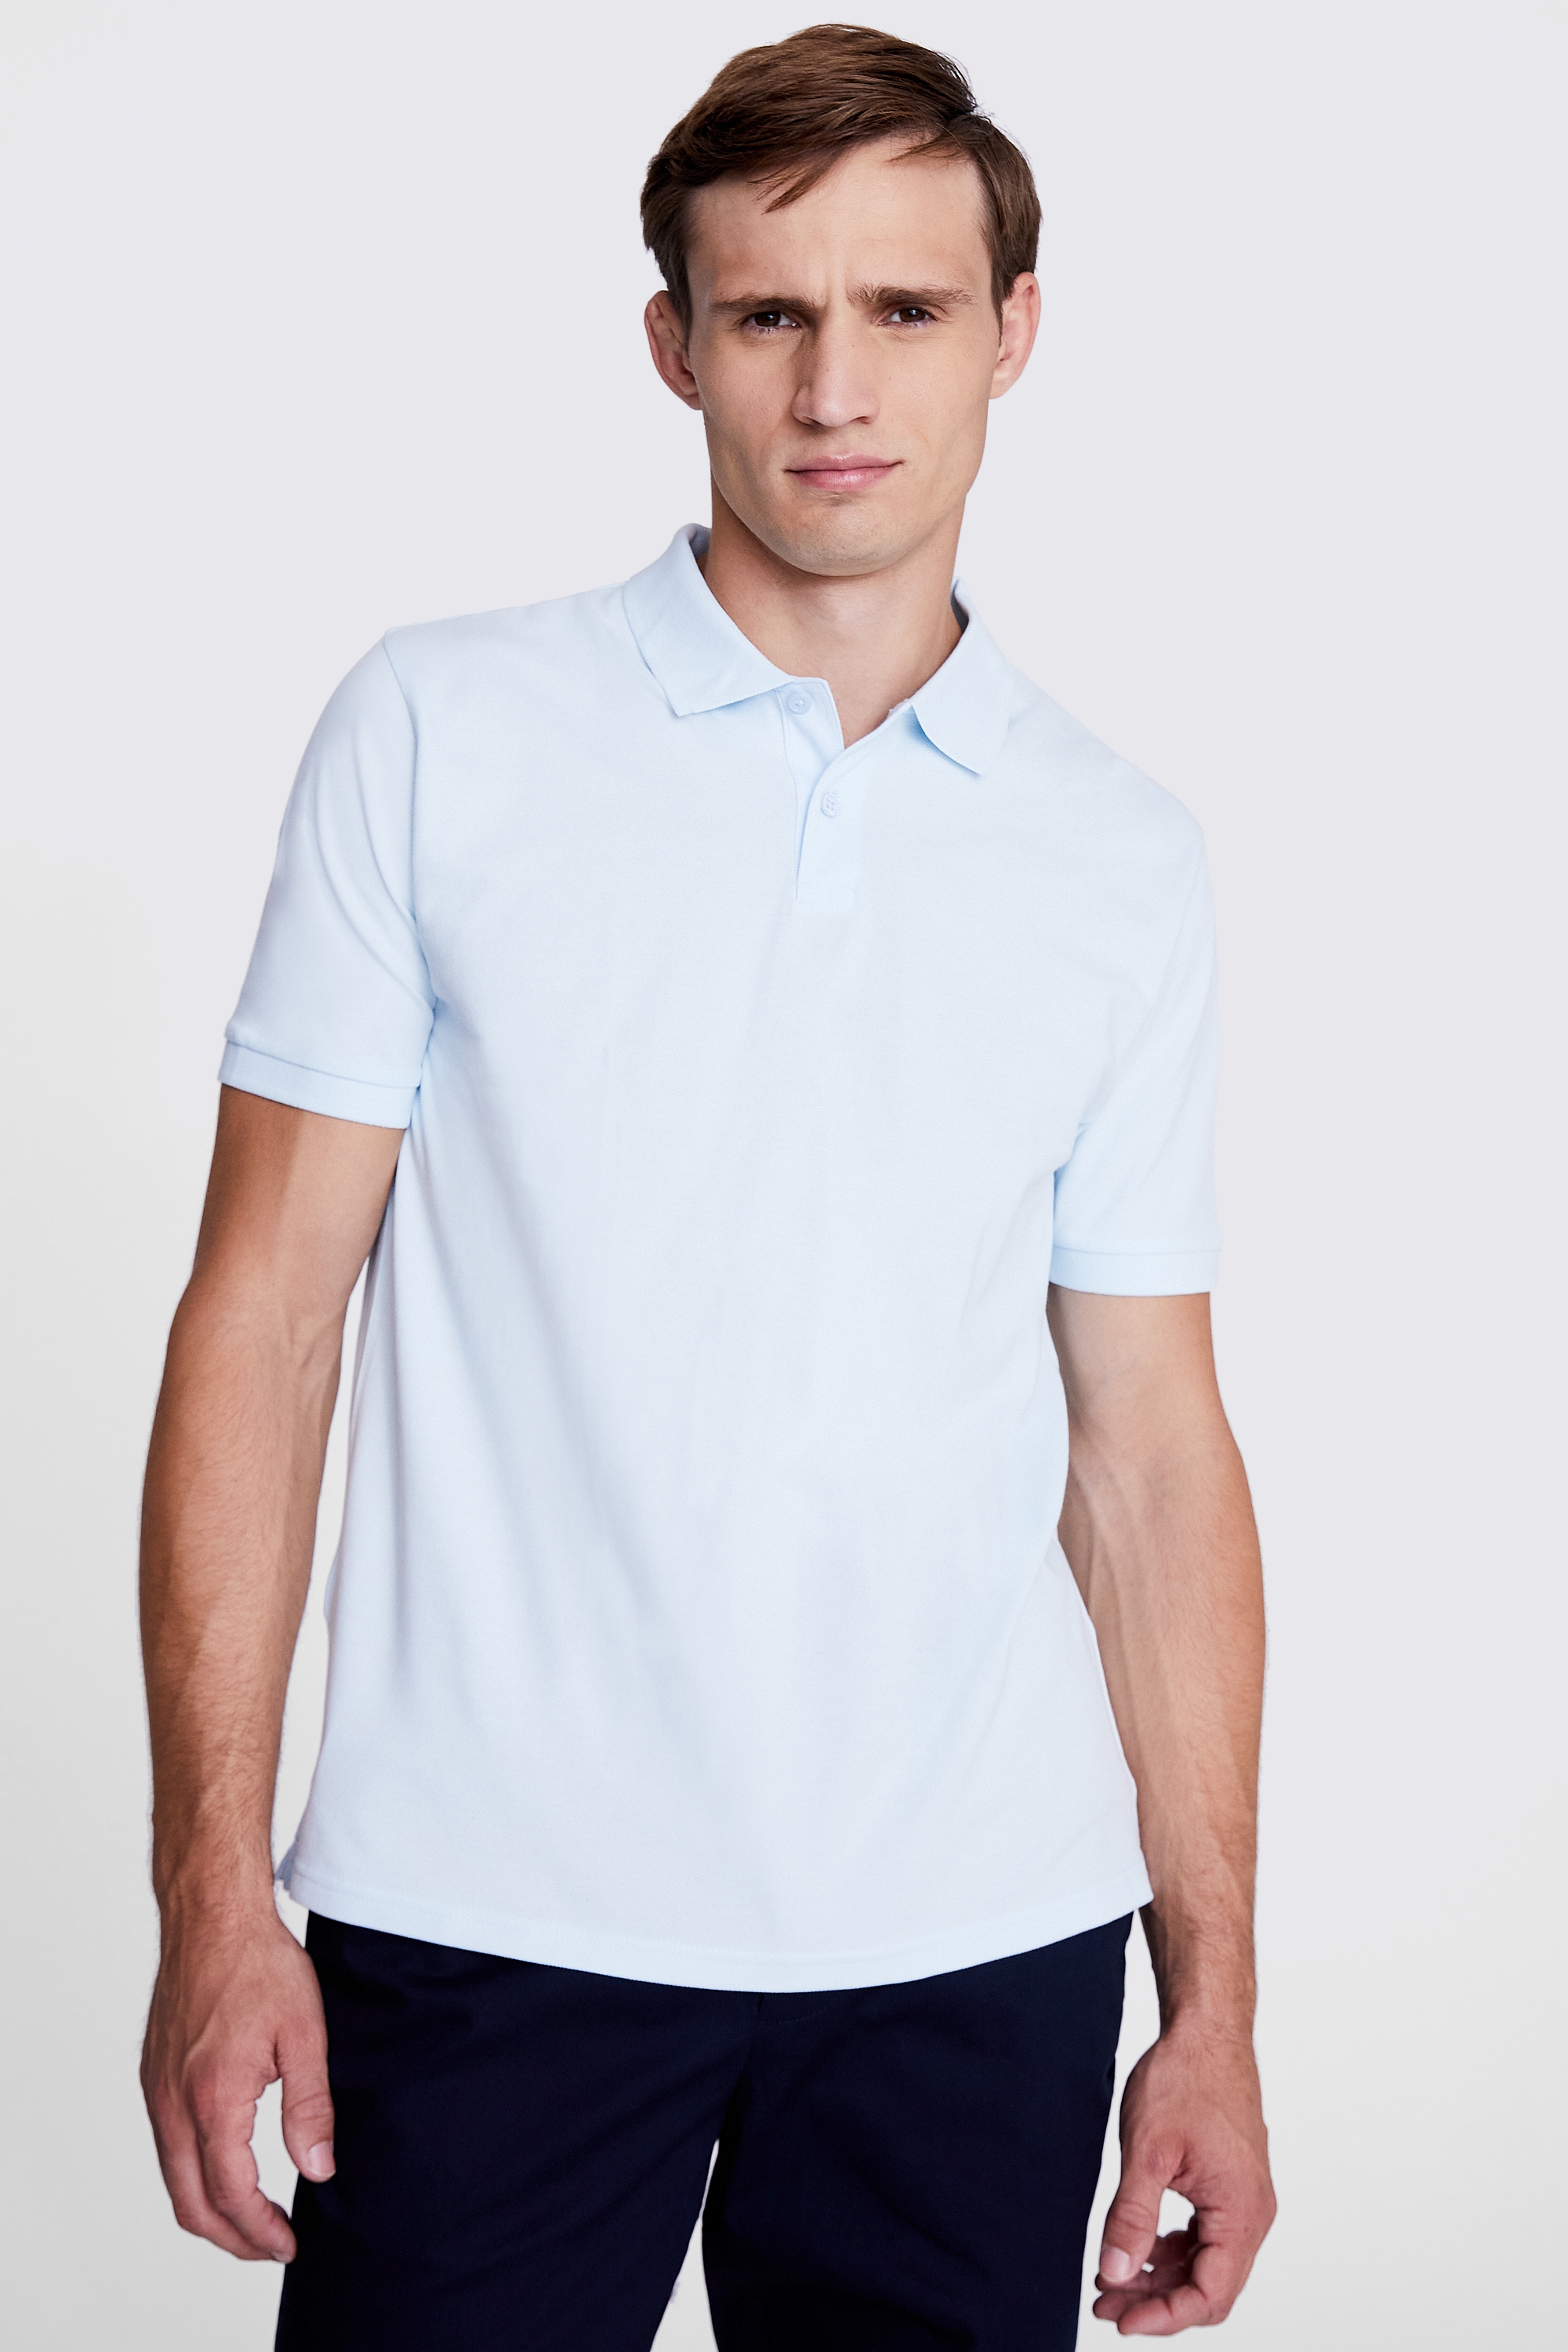 Light Blue Pique Polo Shirt | Buy Online at Moss